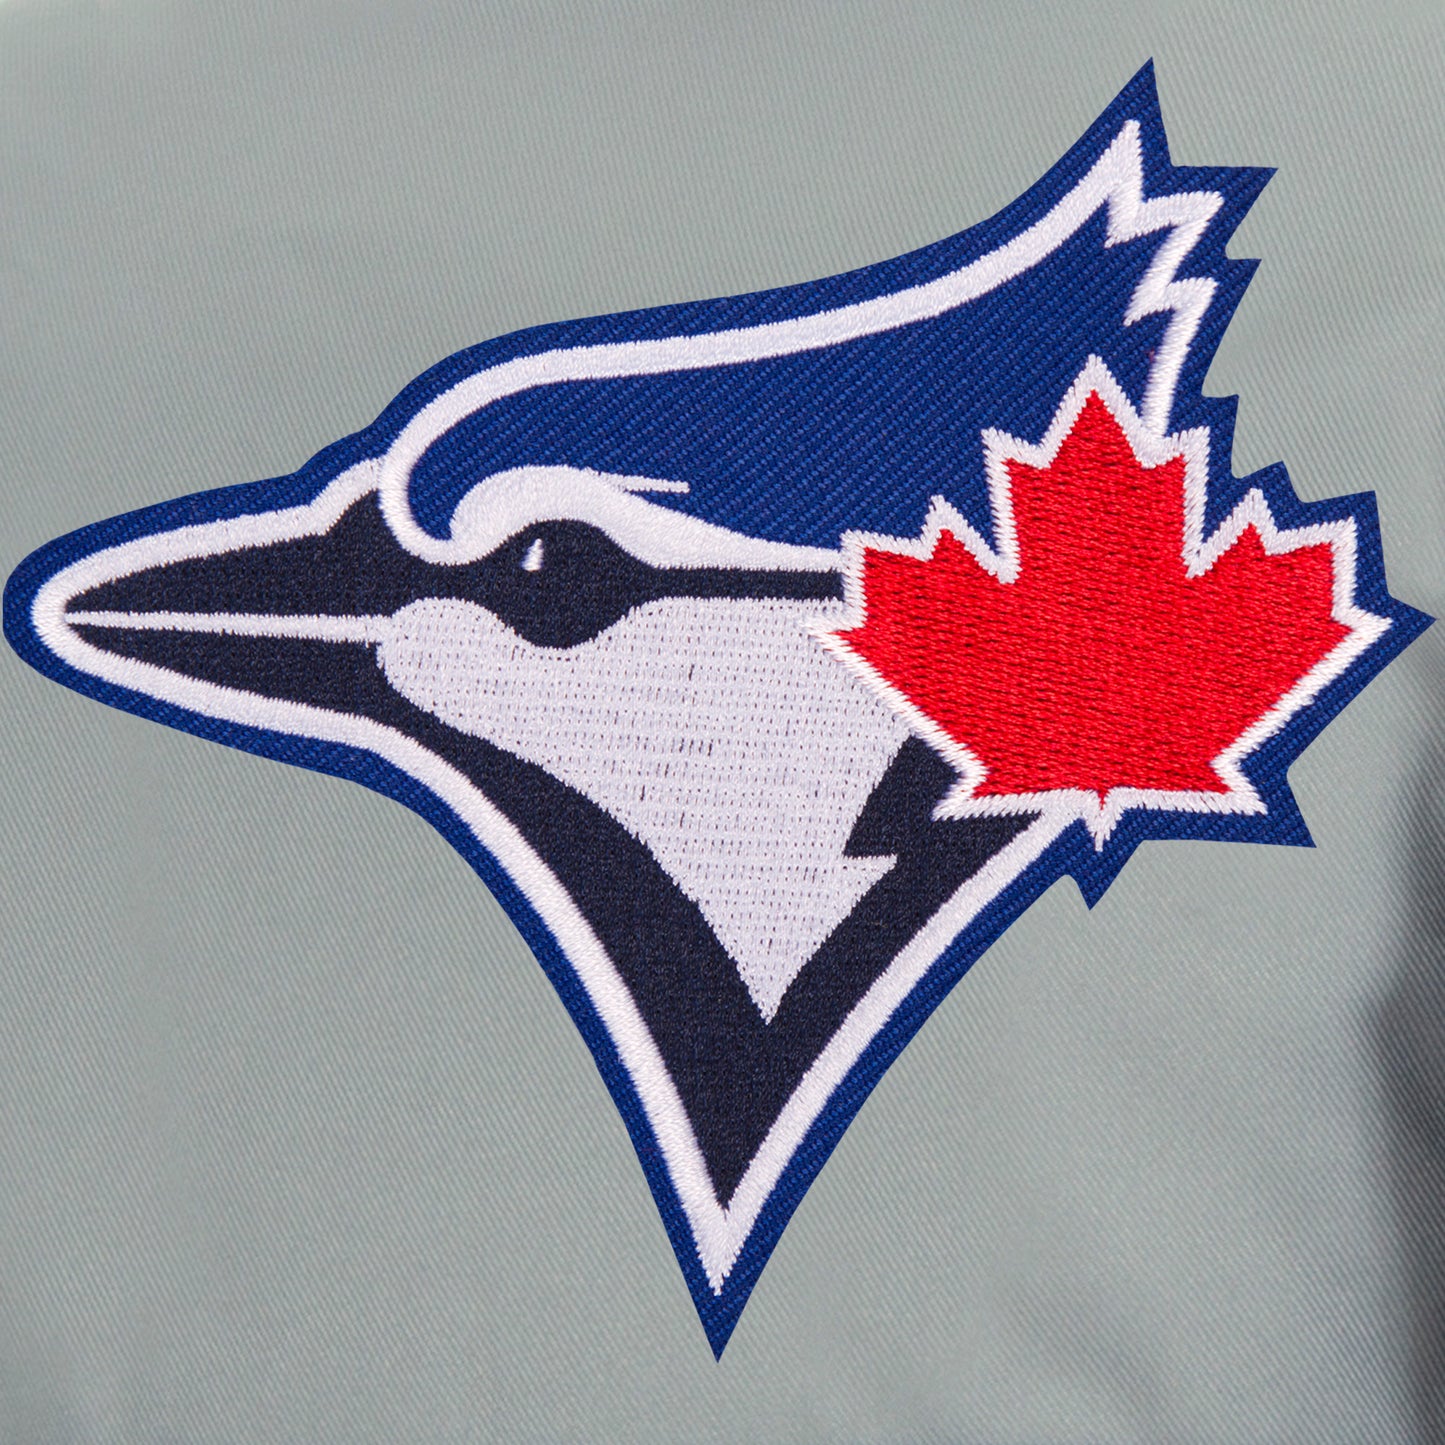 Toronto Blue Jays Kids Poly-Twill Jacket